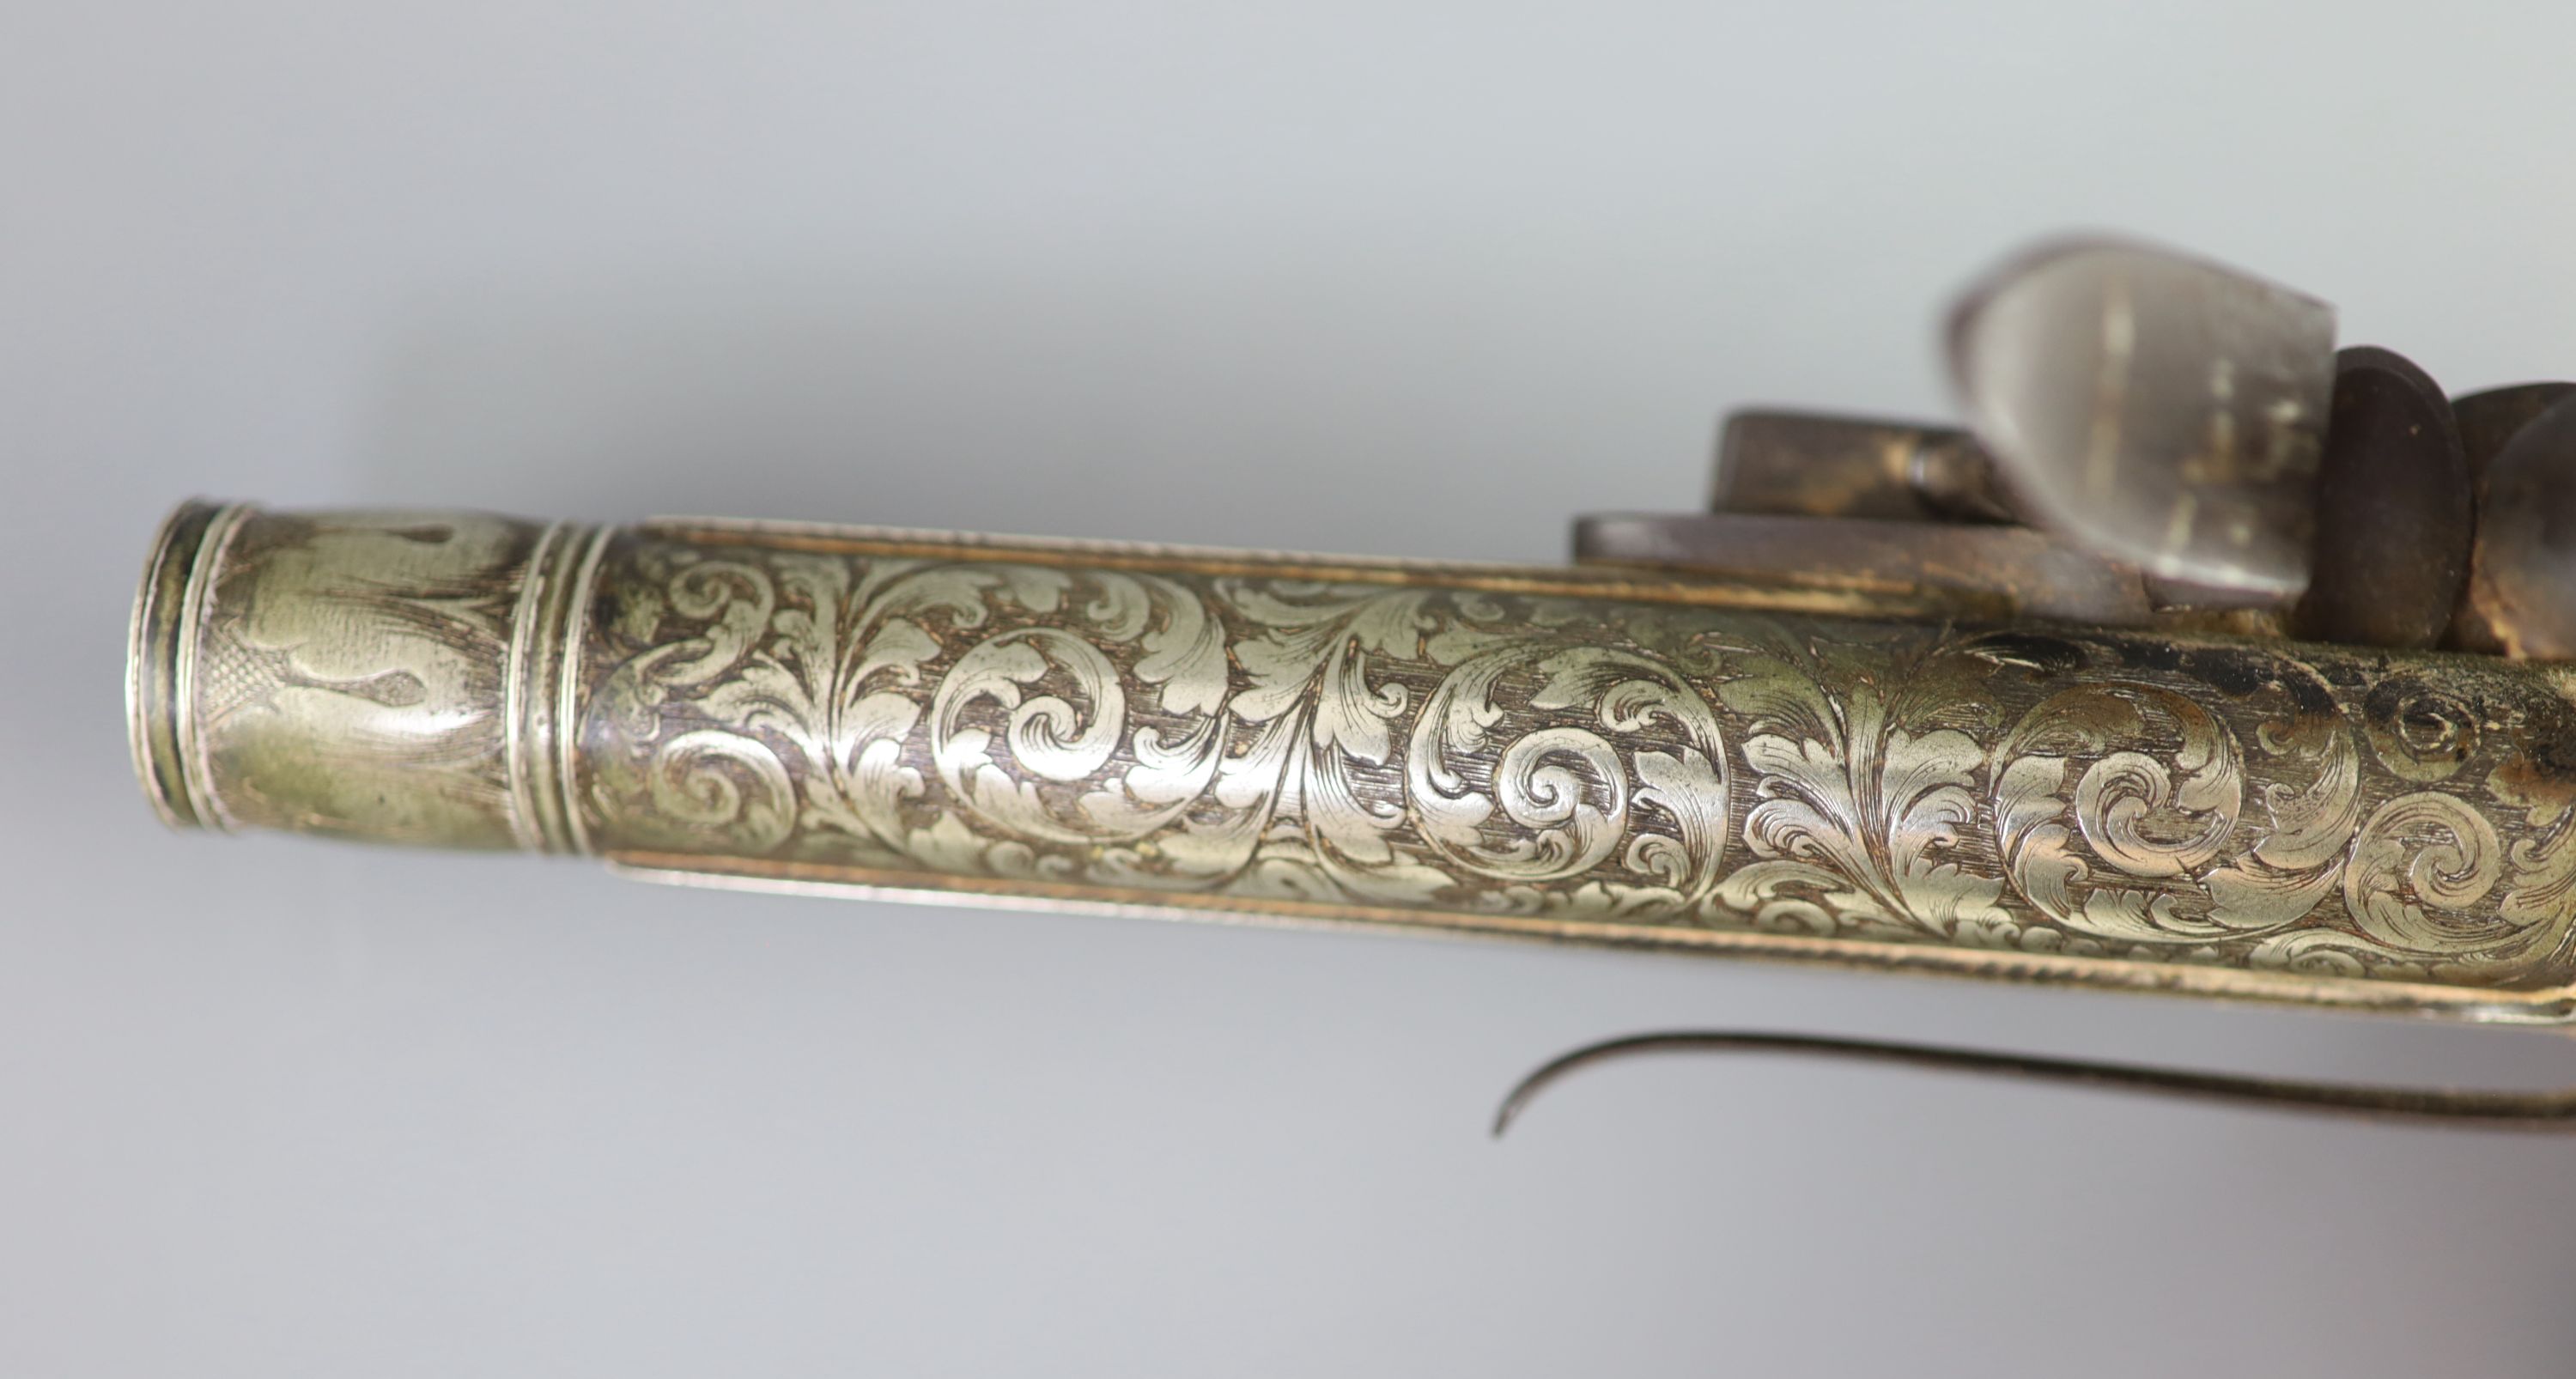 A good Scottish all-metal flintlock belt pistol c.1830, 24cm long